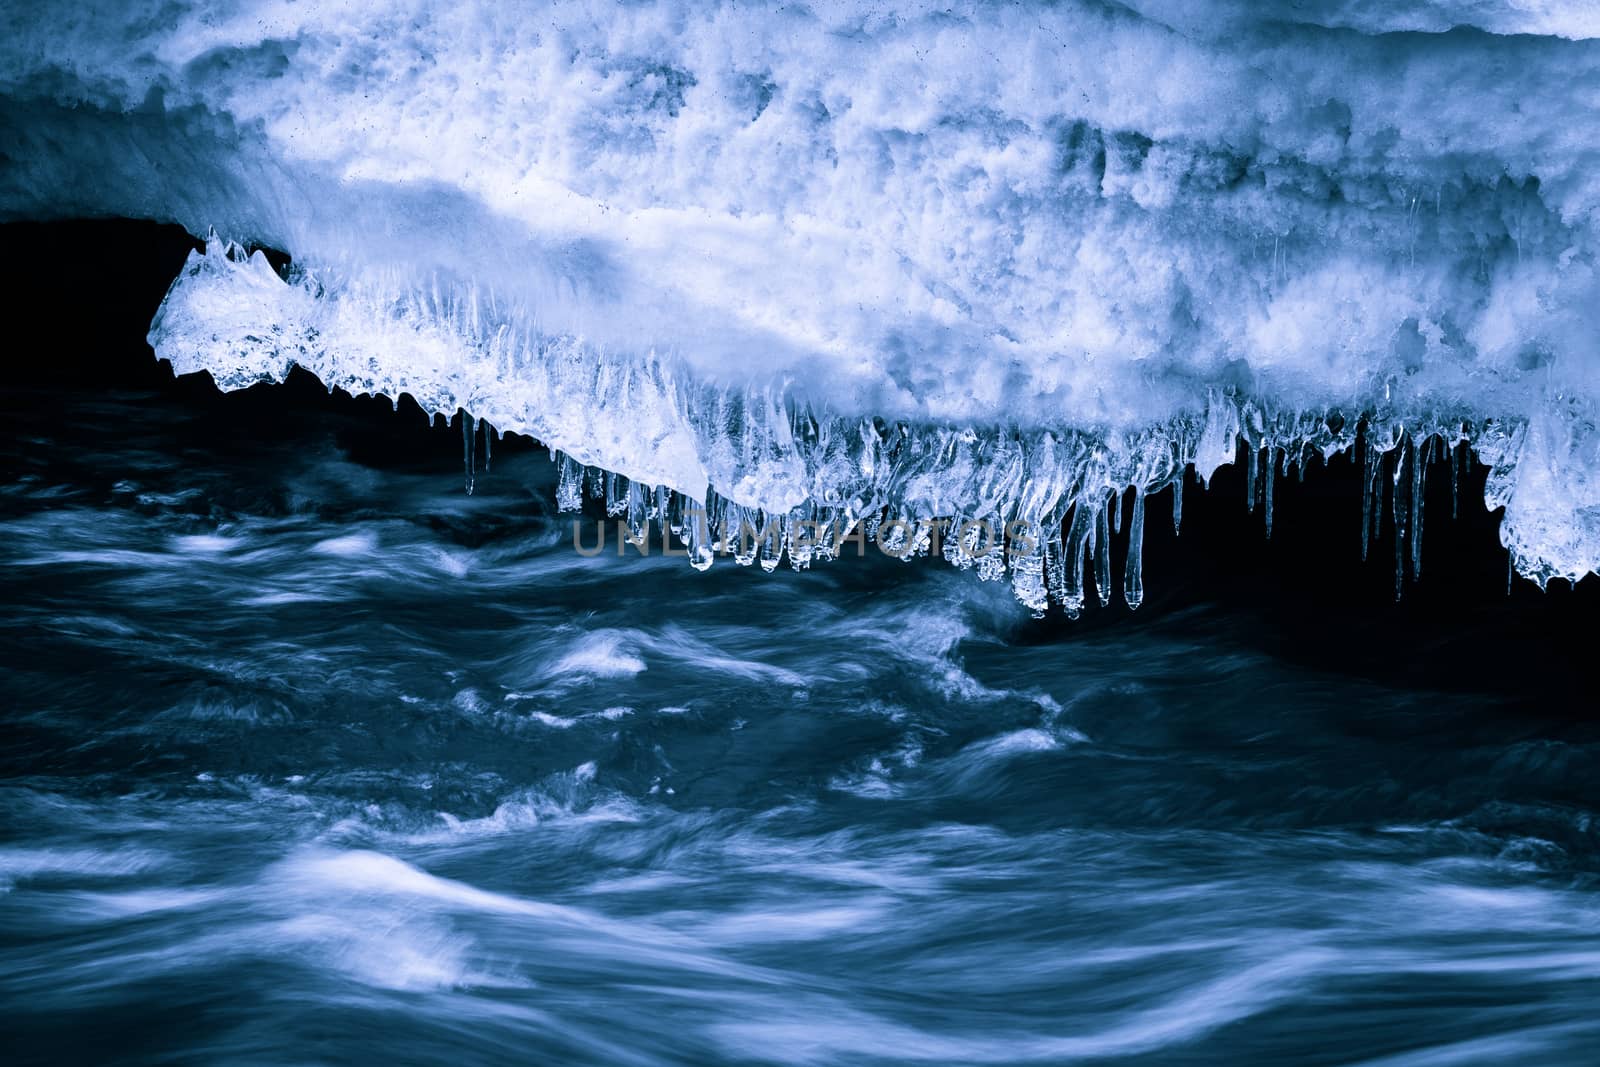 Flowing water under ice. by leorantala